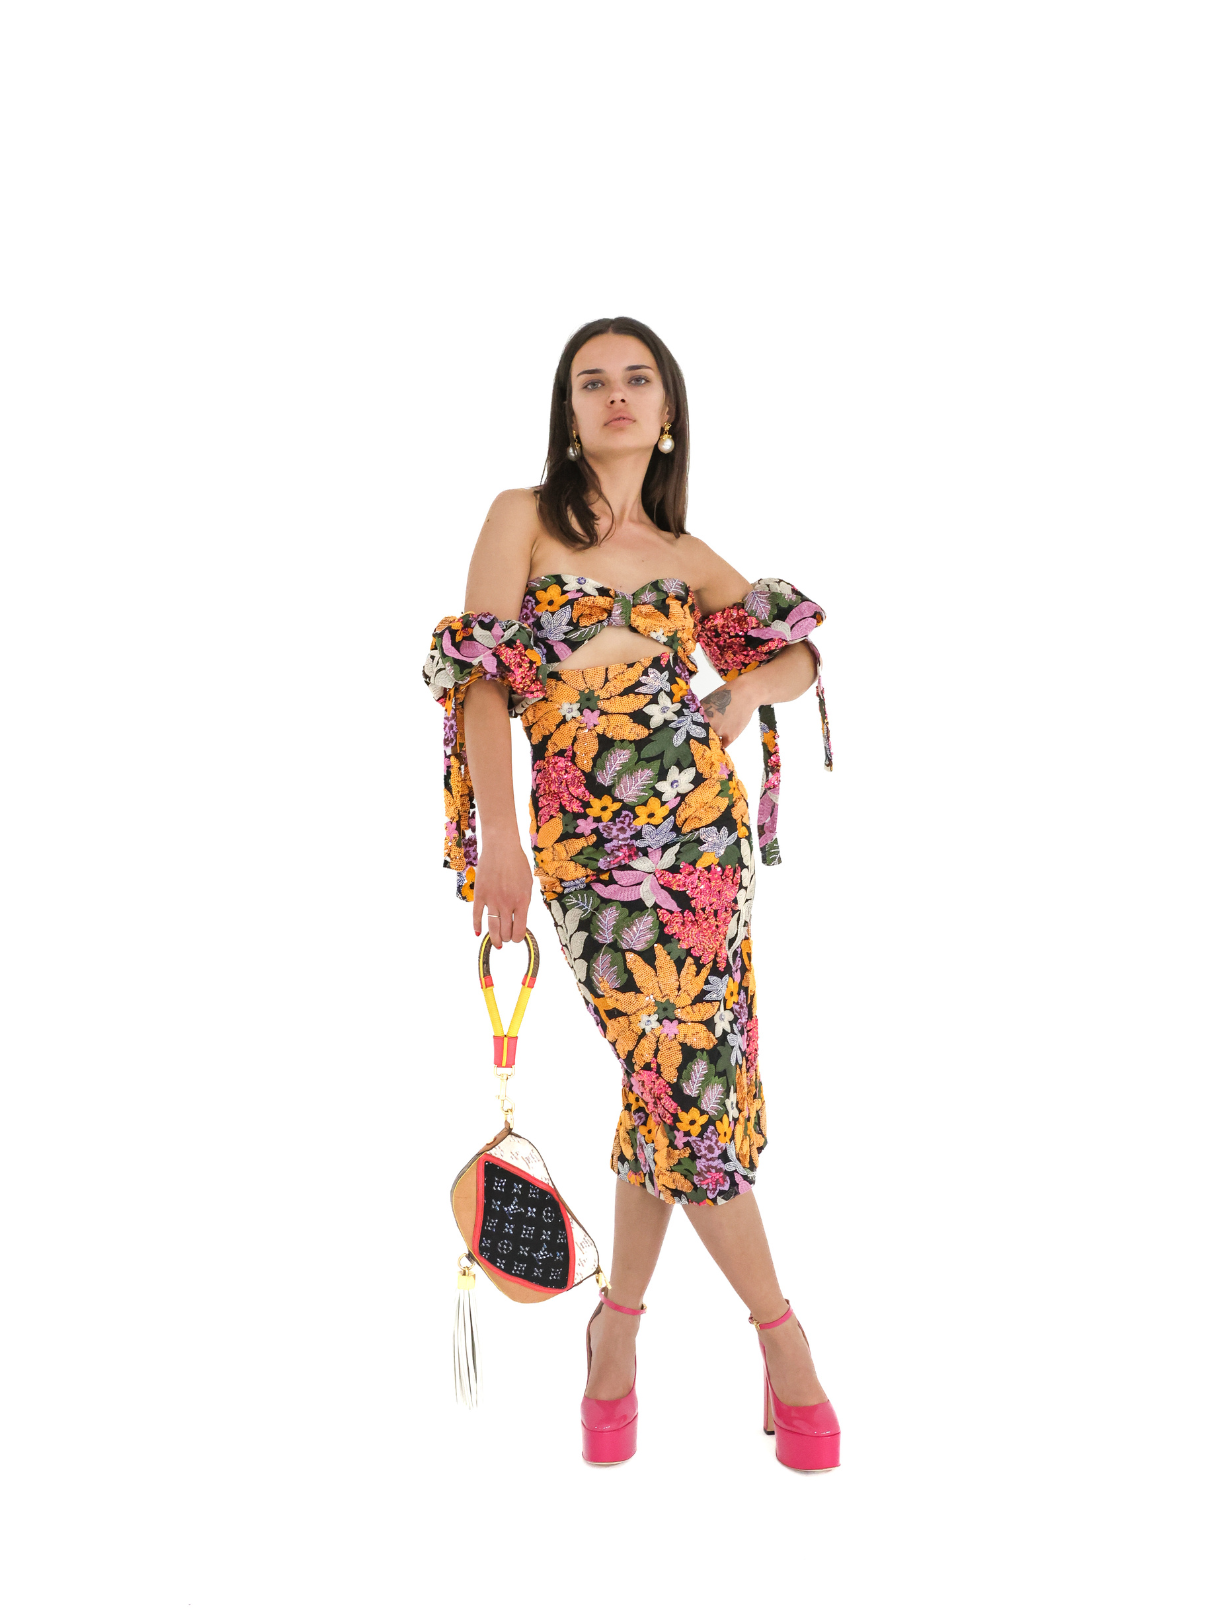 Femme portant une robe midi fleuris